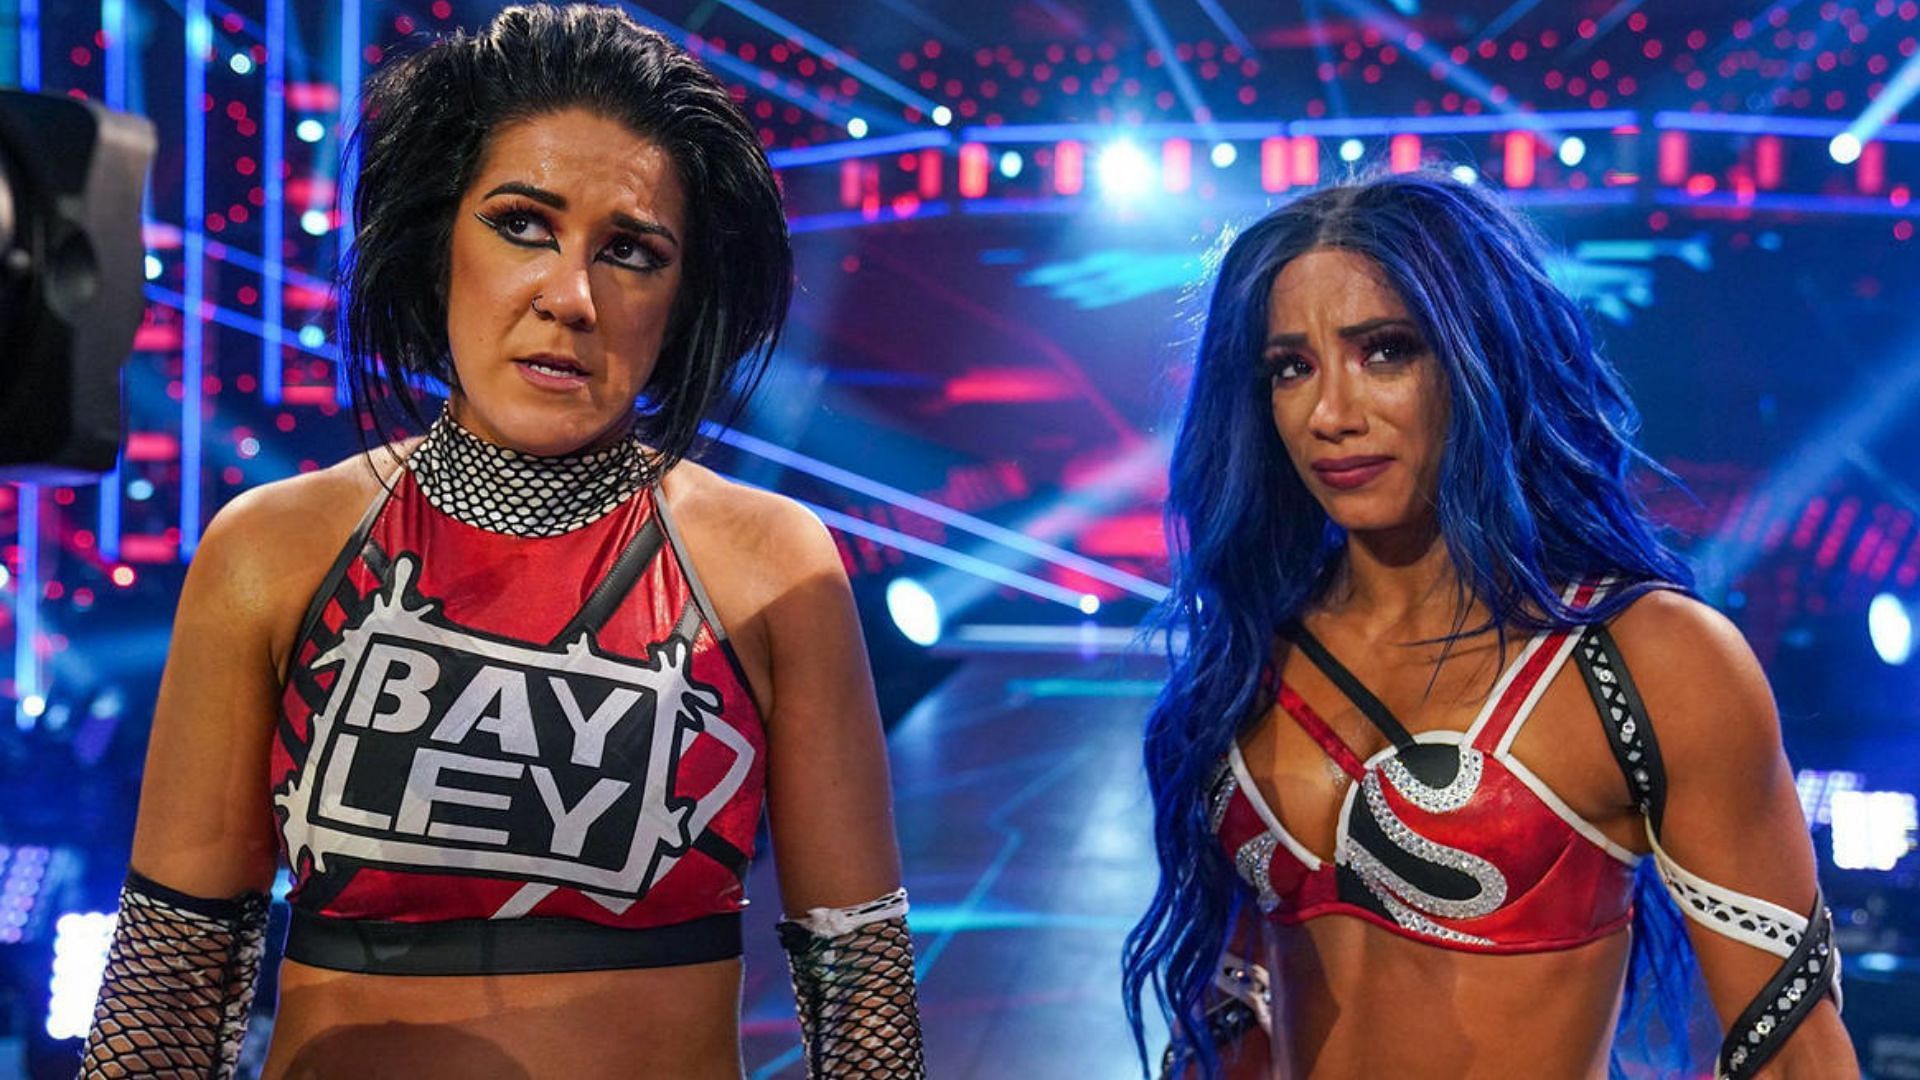 Bayley and Sasha Banks at WWE Payback 2020!